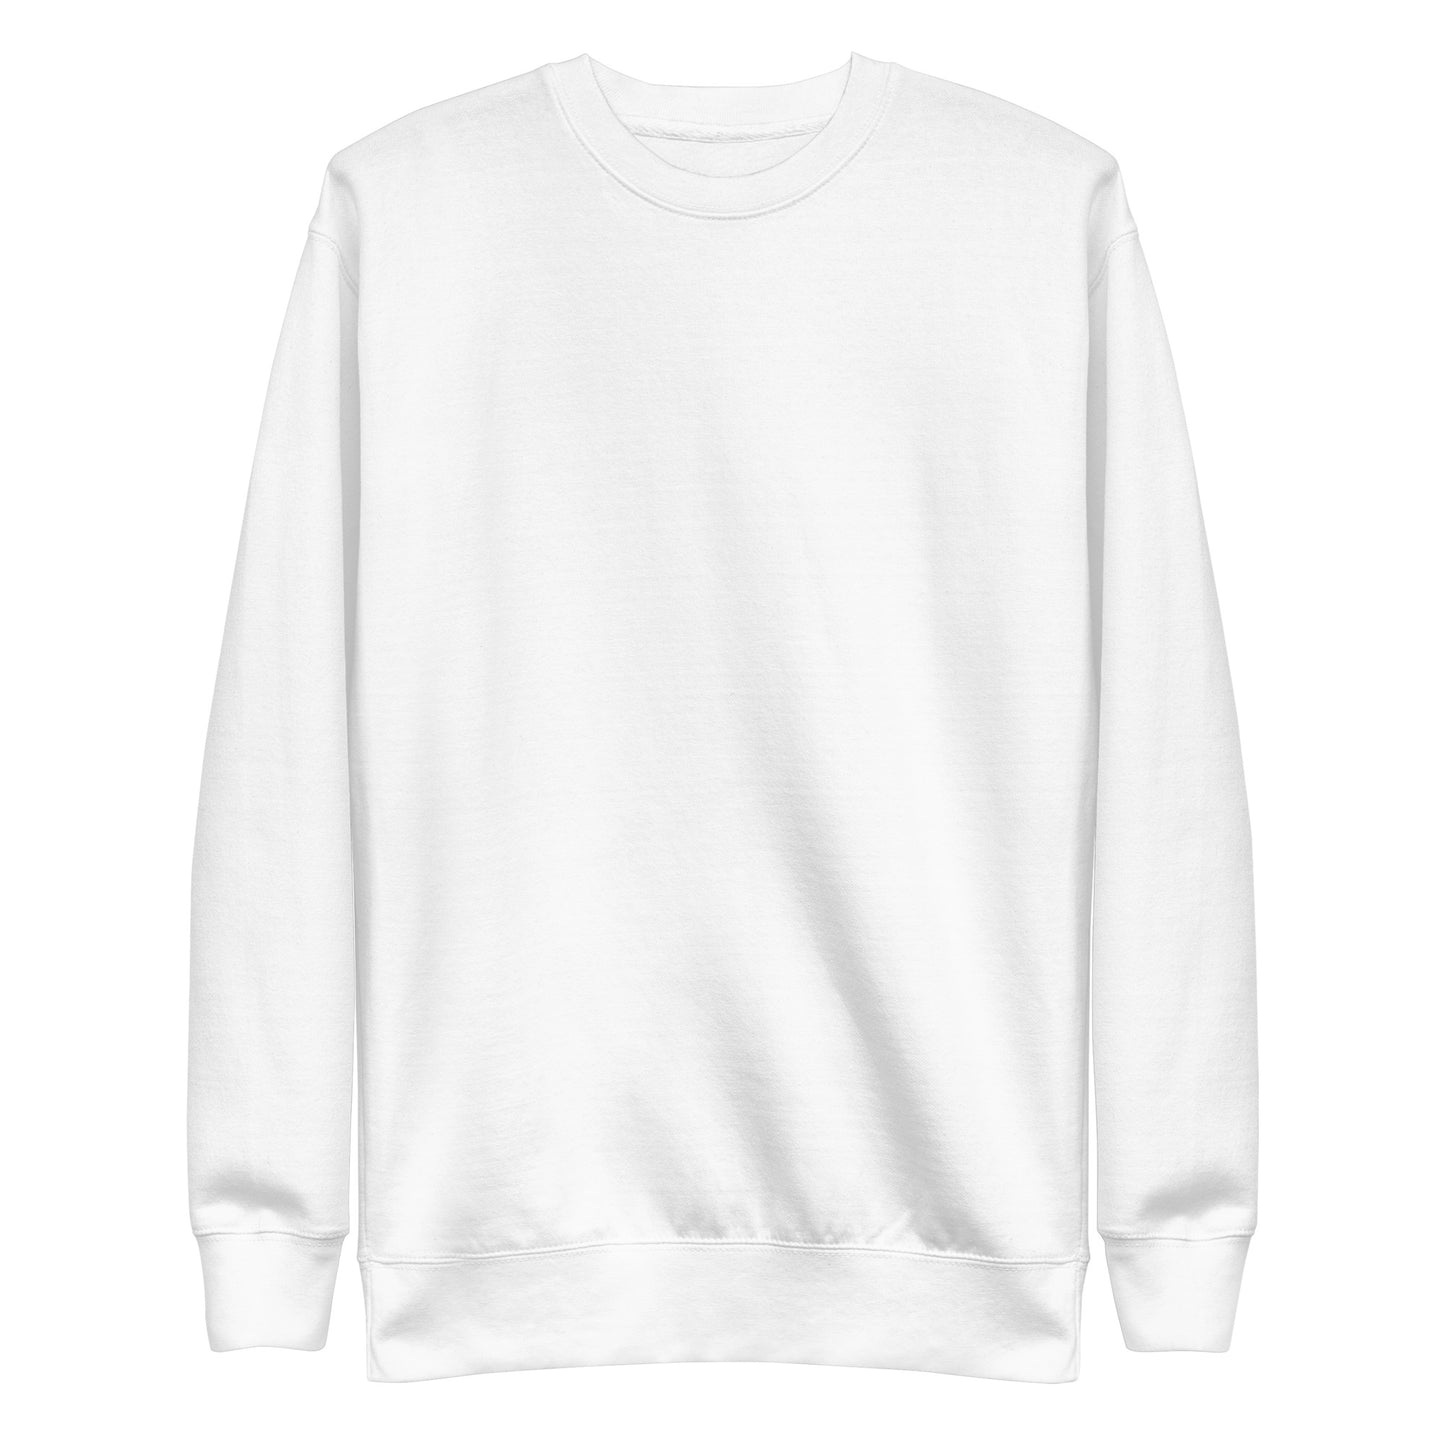 Sinister (B&W) - Unisex Premium Sweatshirt